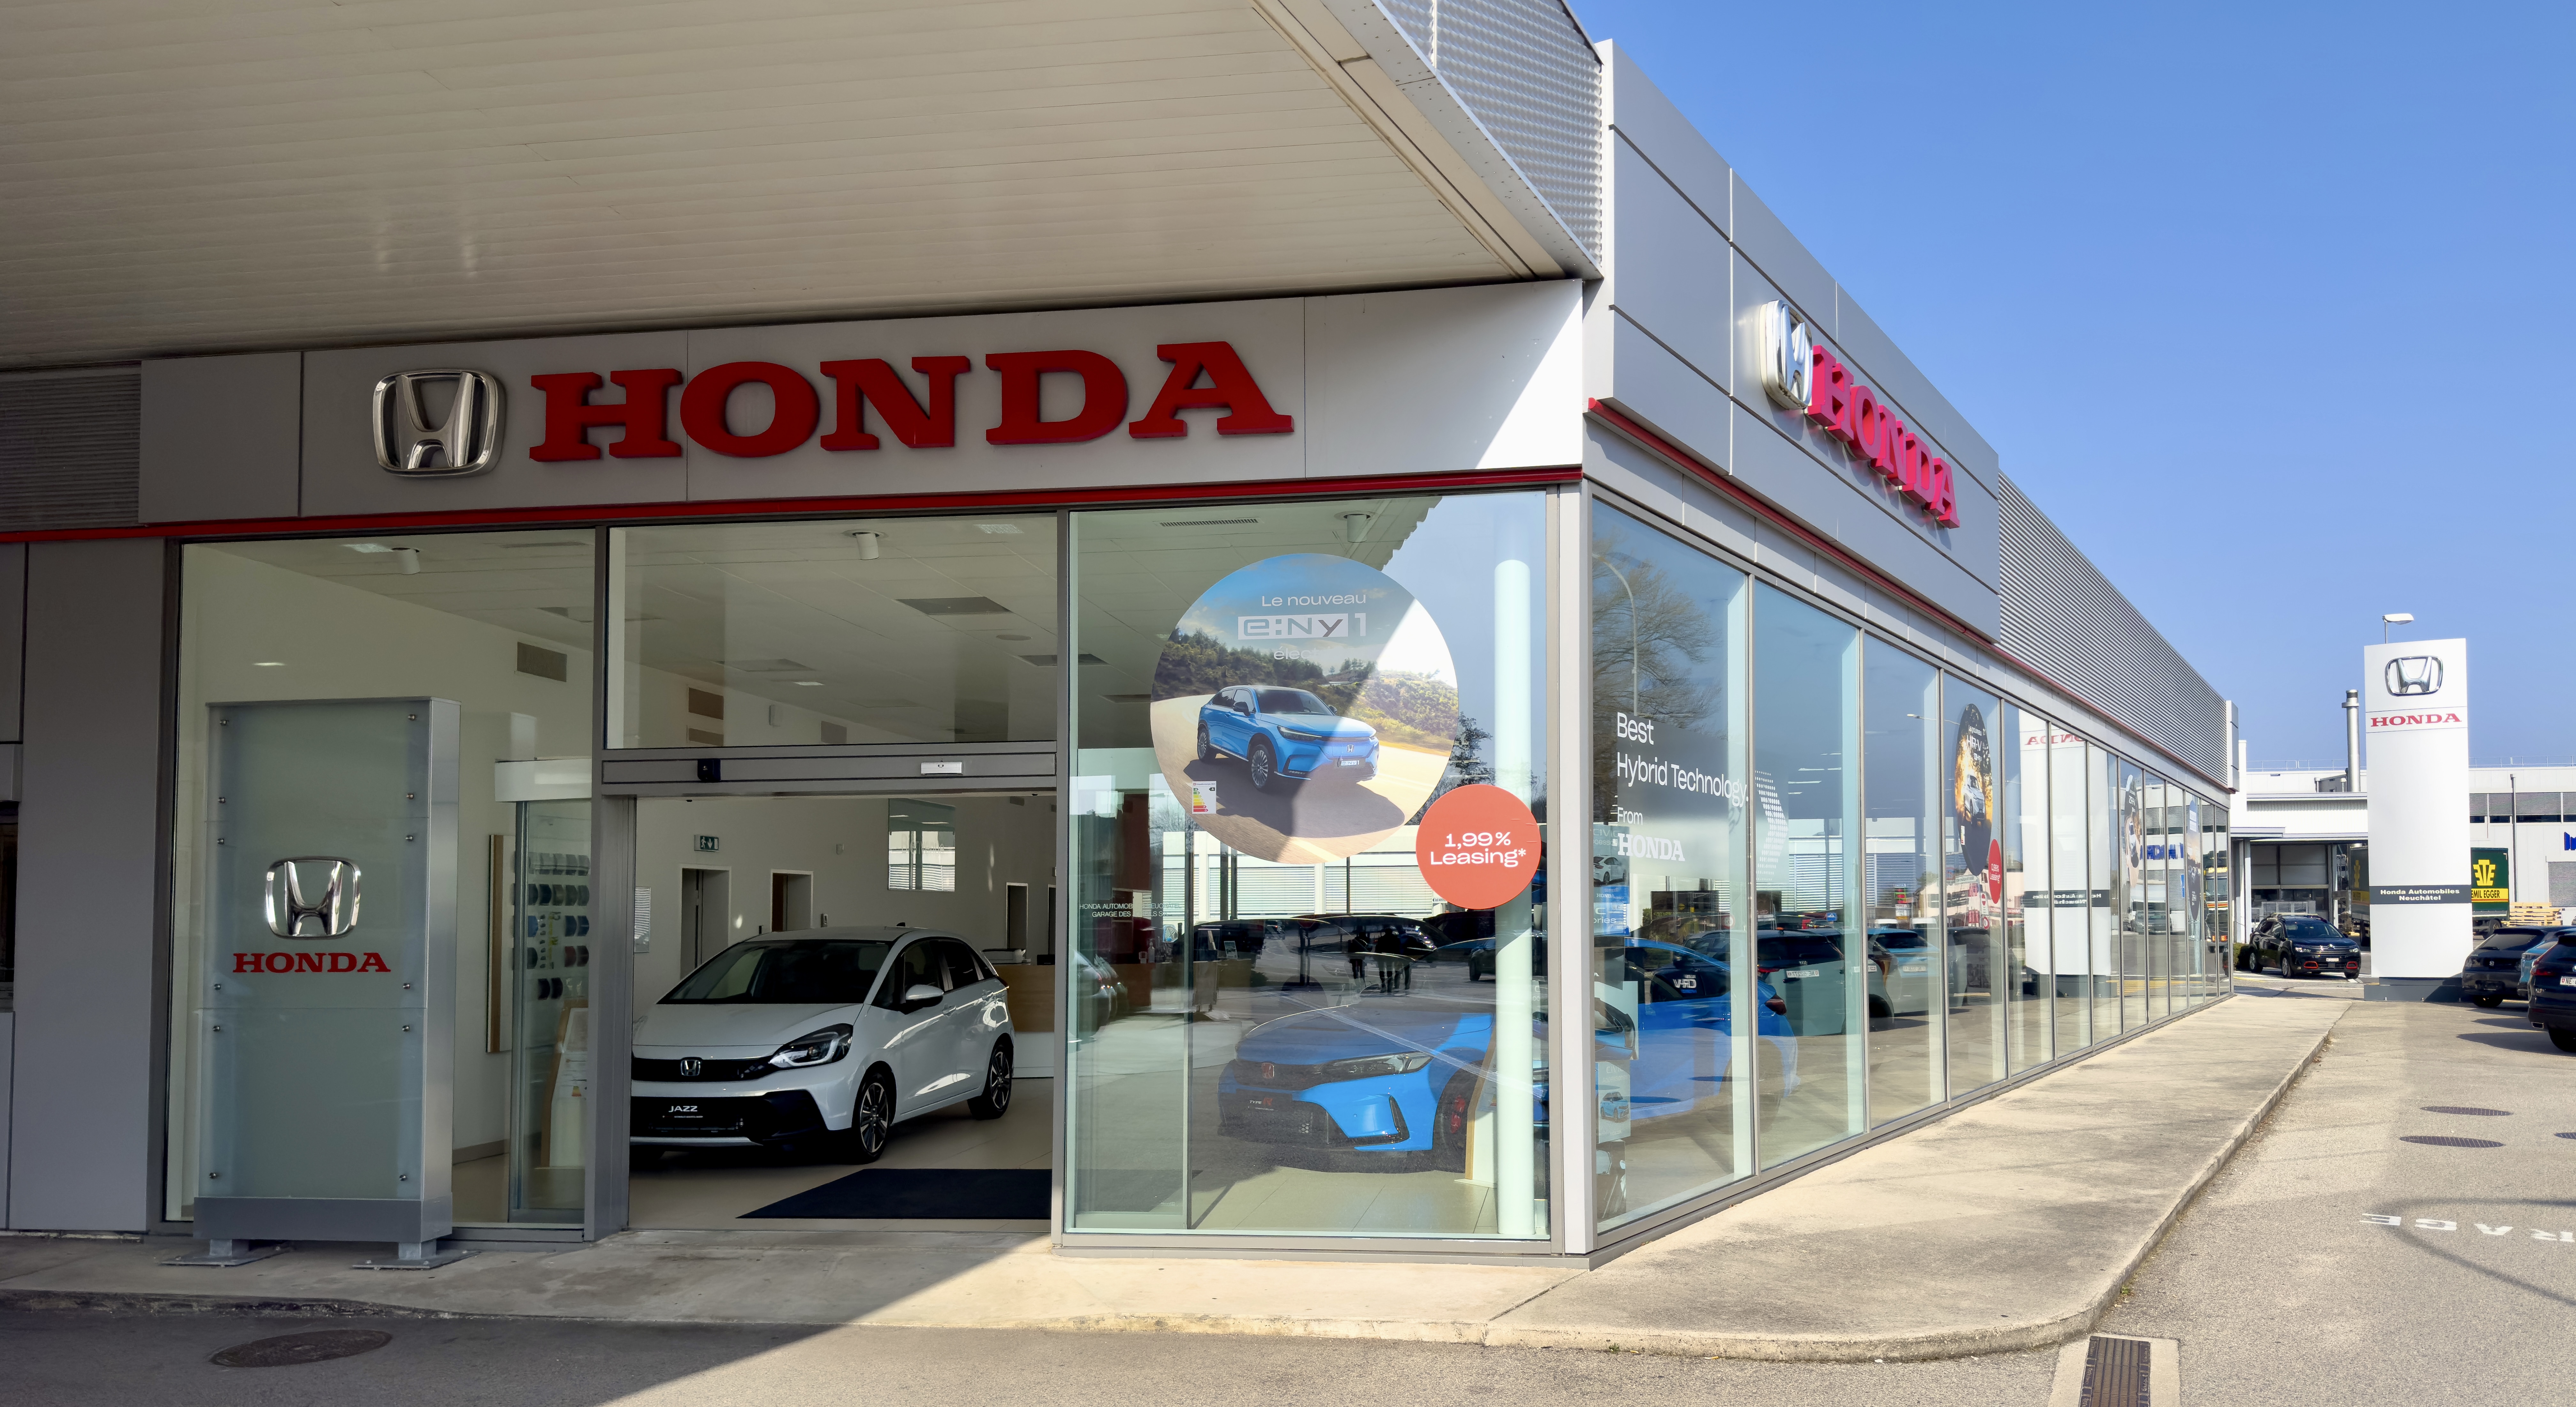  Garage Honda Automobiles Neuchâtel